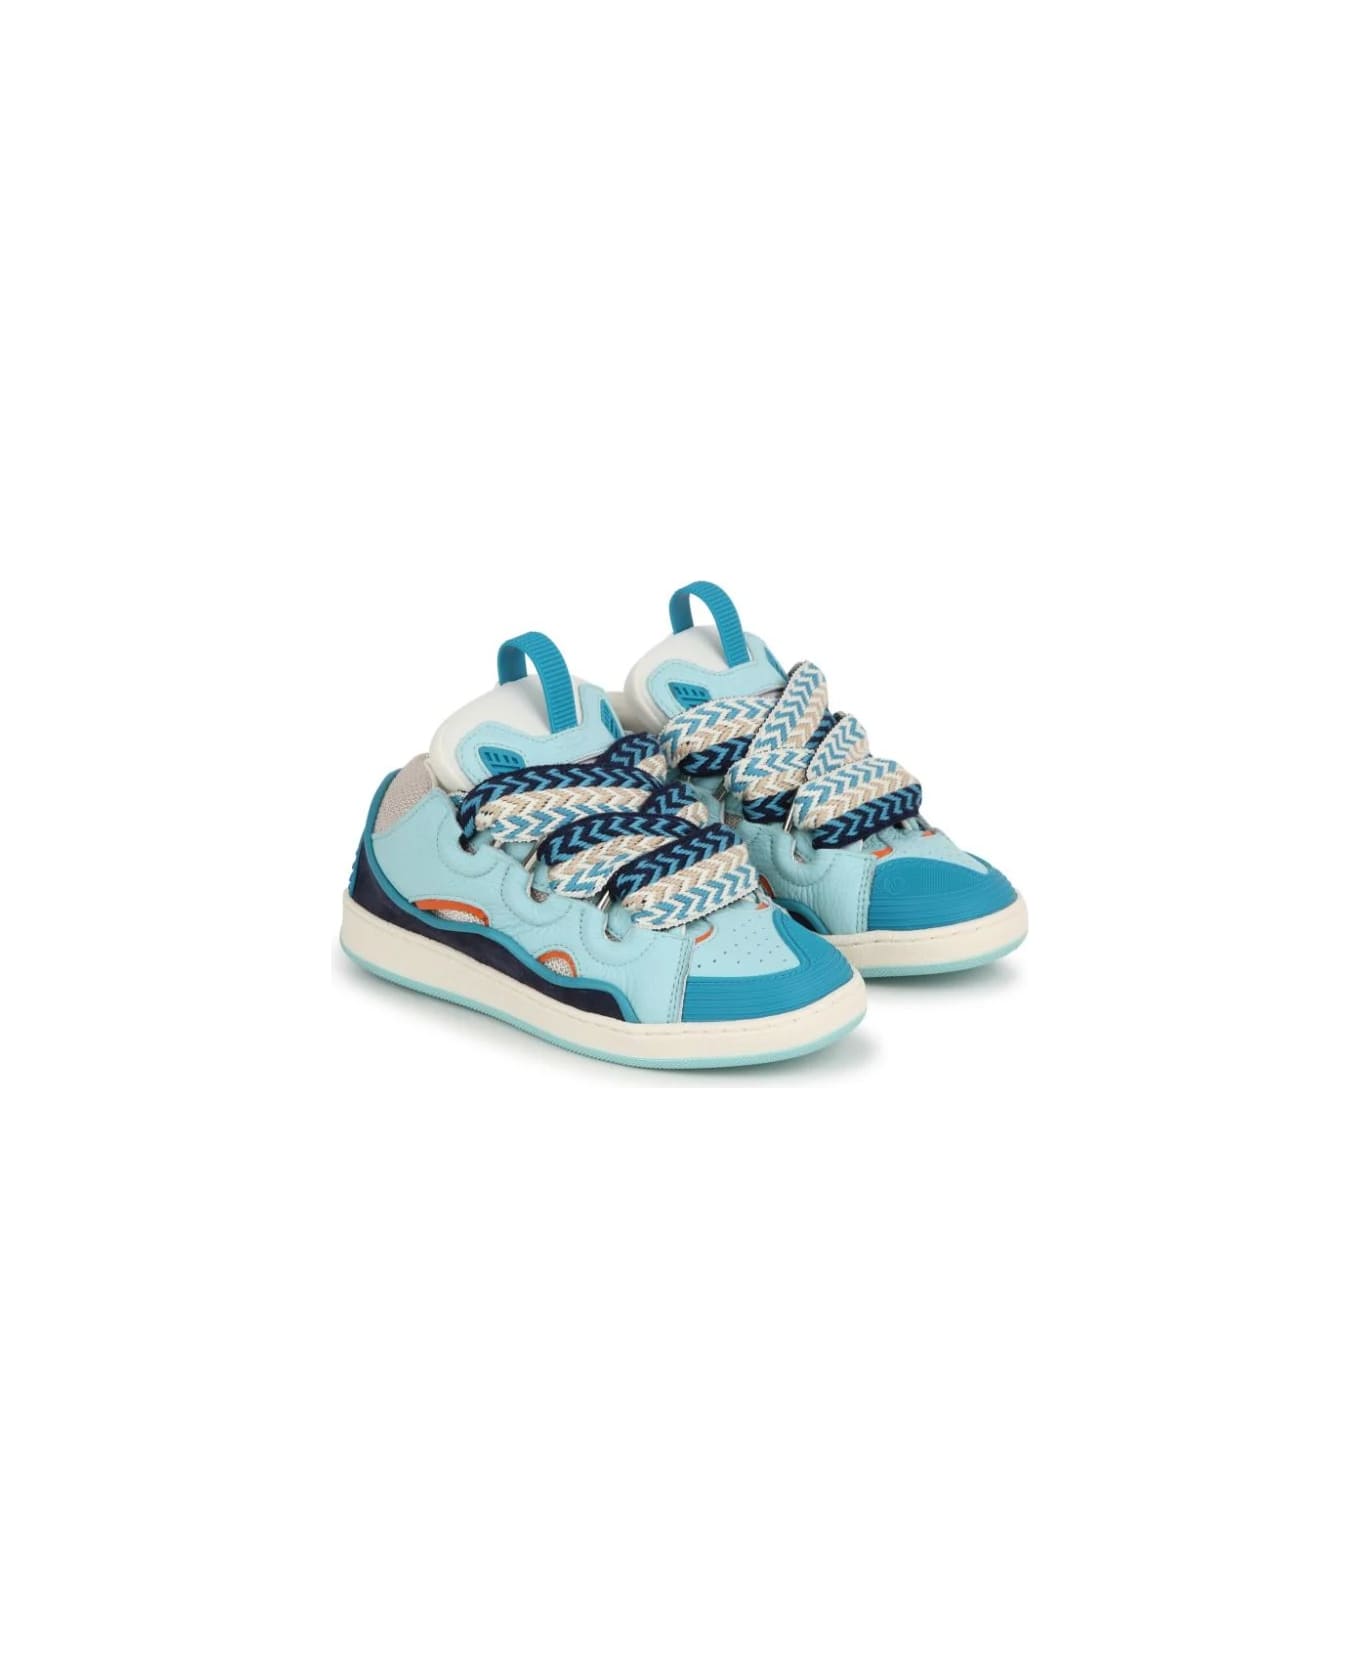 Lanvin Aquamarine Leather Curb Sneakers - Blue シューズ